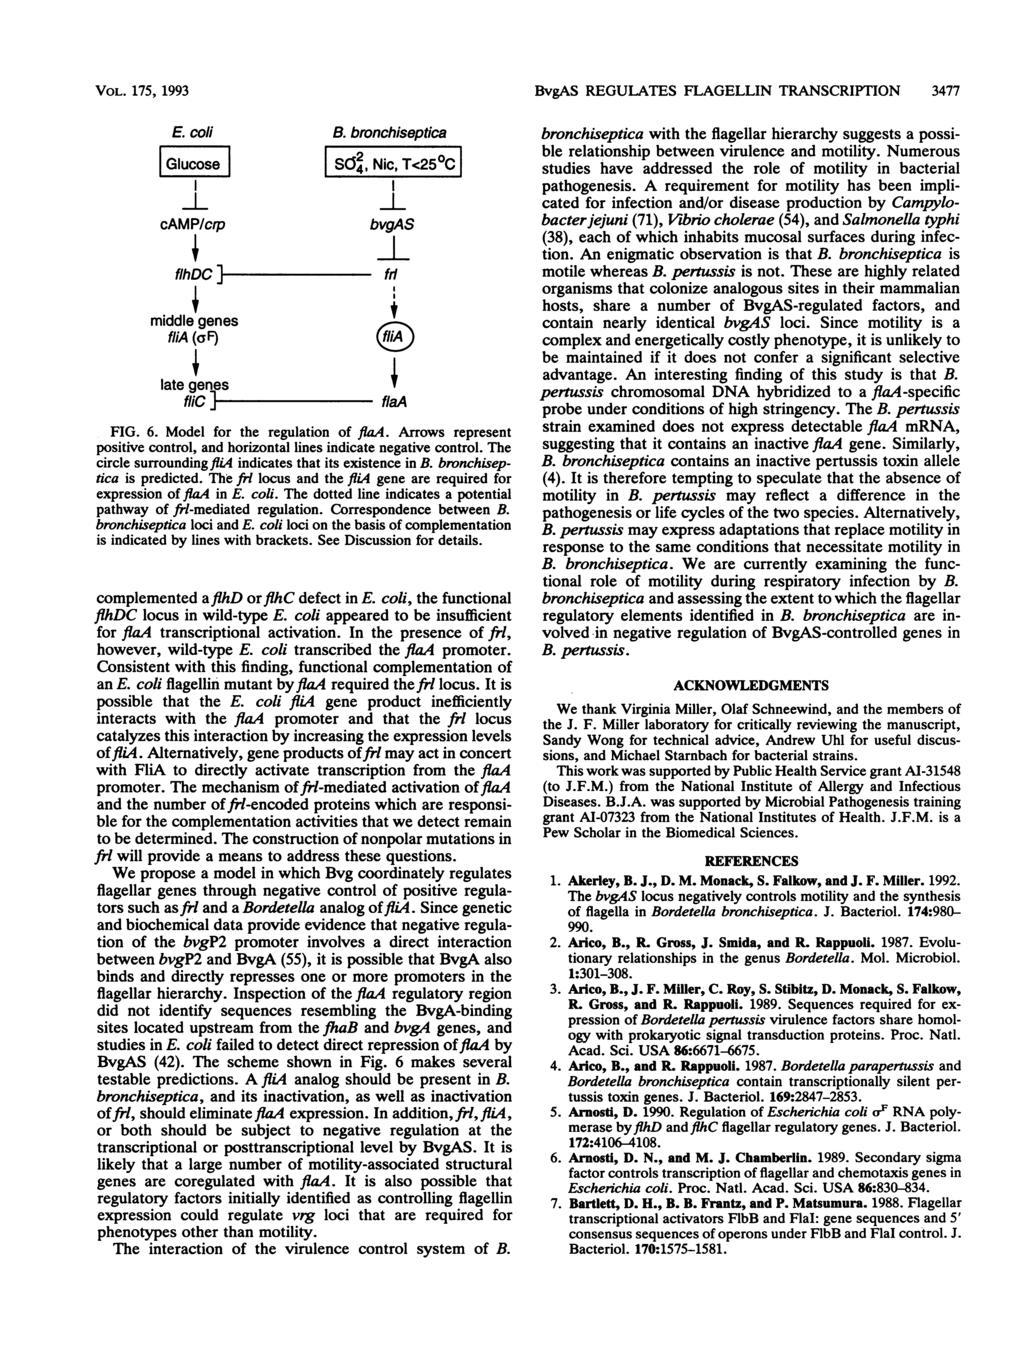 VOL. 175, 1993 E. coli Glucose camp/crp flhdc ]- middle genes flia (af) late genes flic ]- B. bronchiseptica S2, Nic, T<25 C 1 bvgas fri flaa FIG. 6. Model for the regulation of flaa.